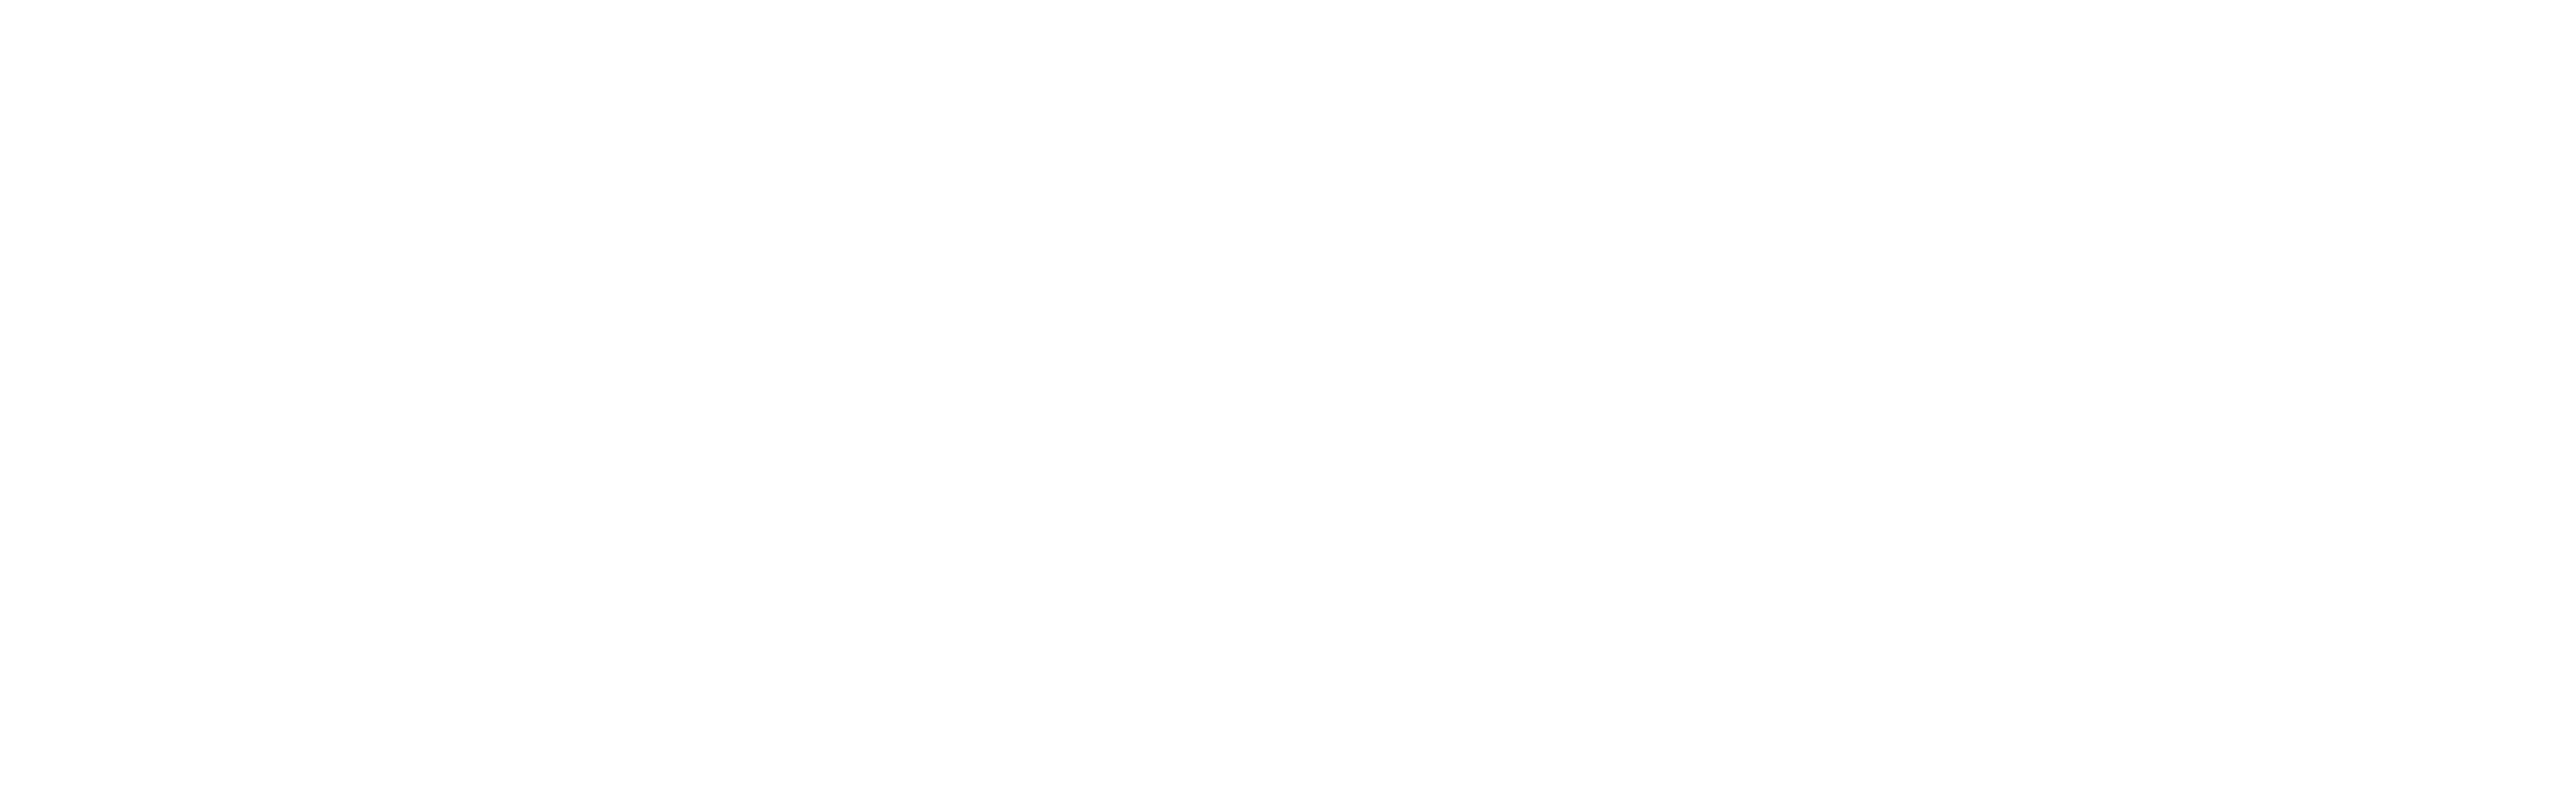 MoutonStore Online